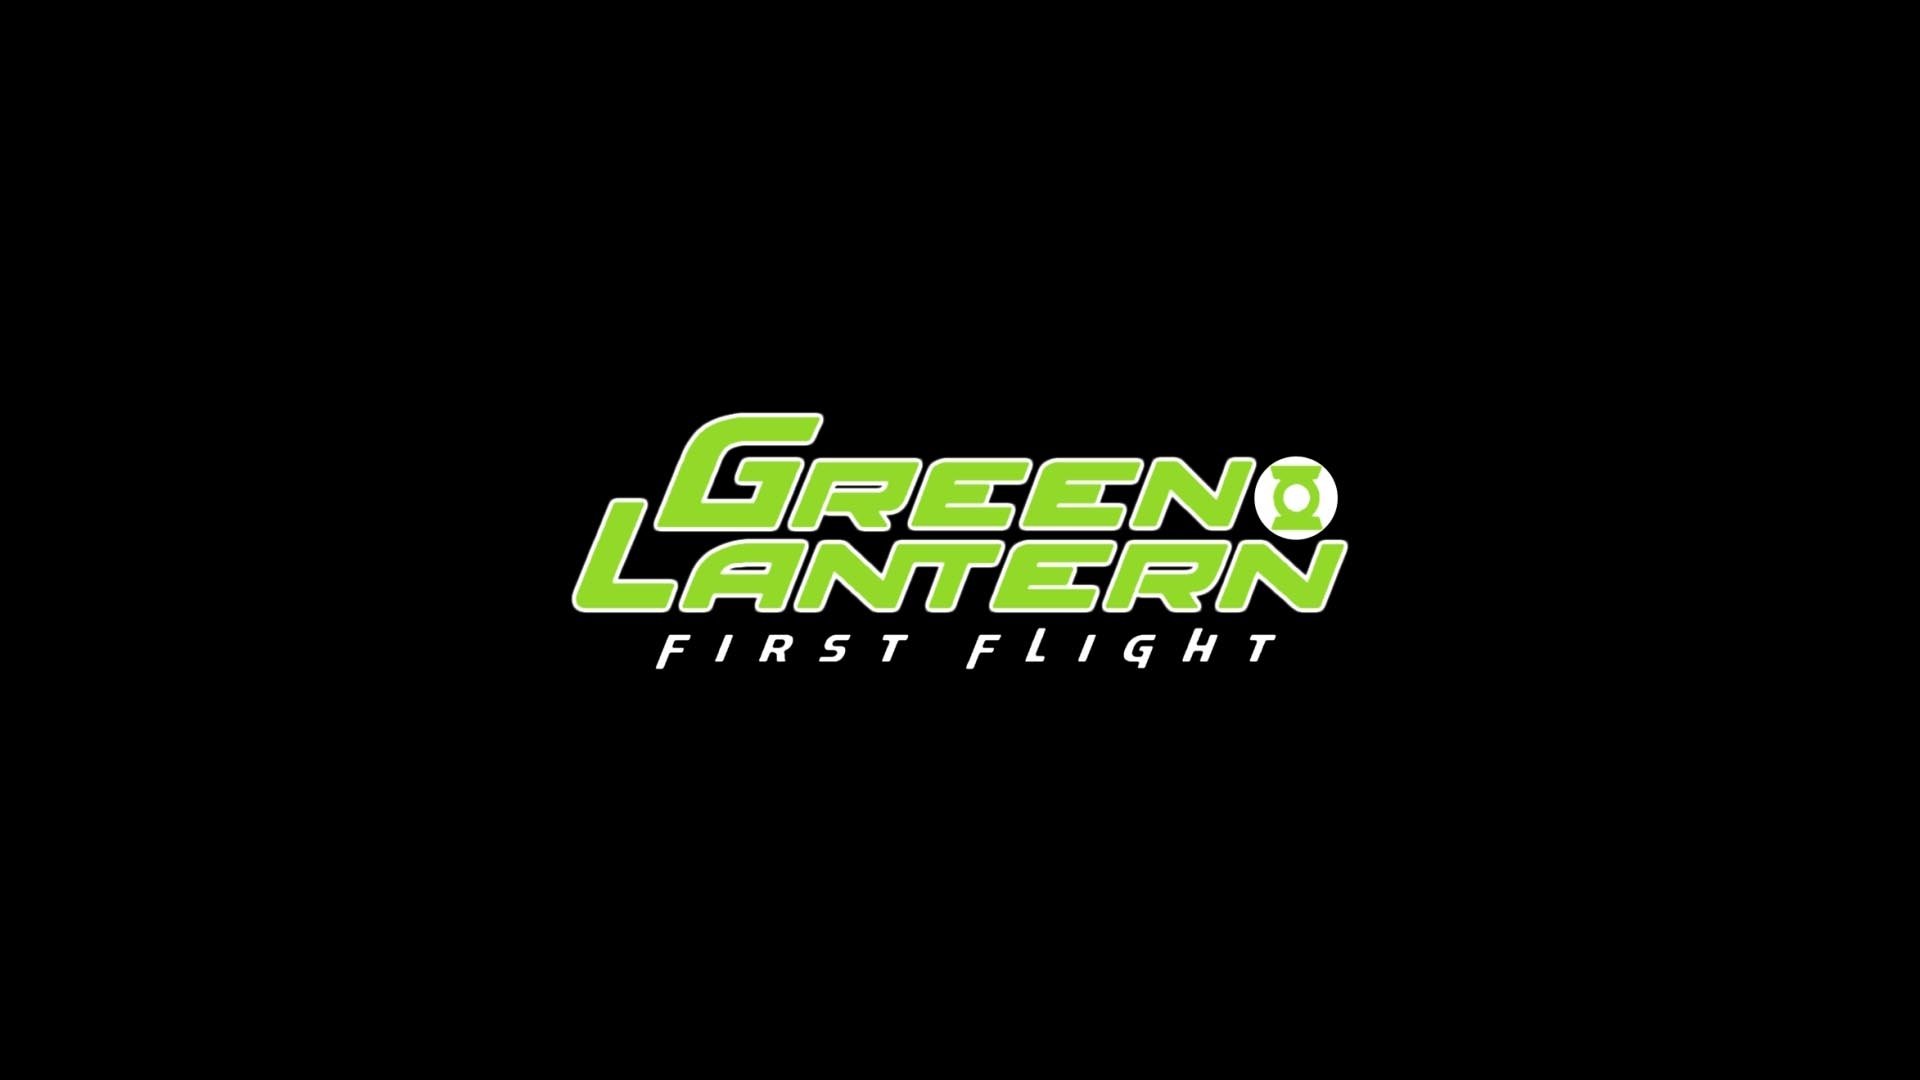 Green Lantern First Flight HD Wallpaper Background Image